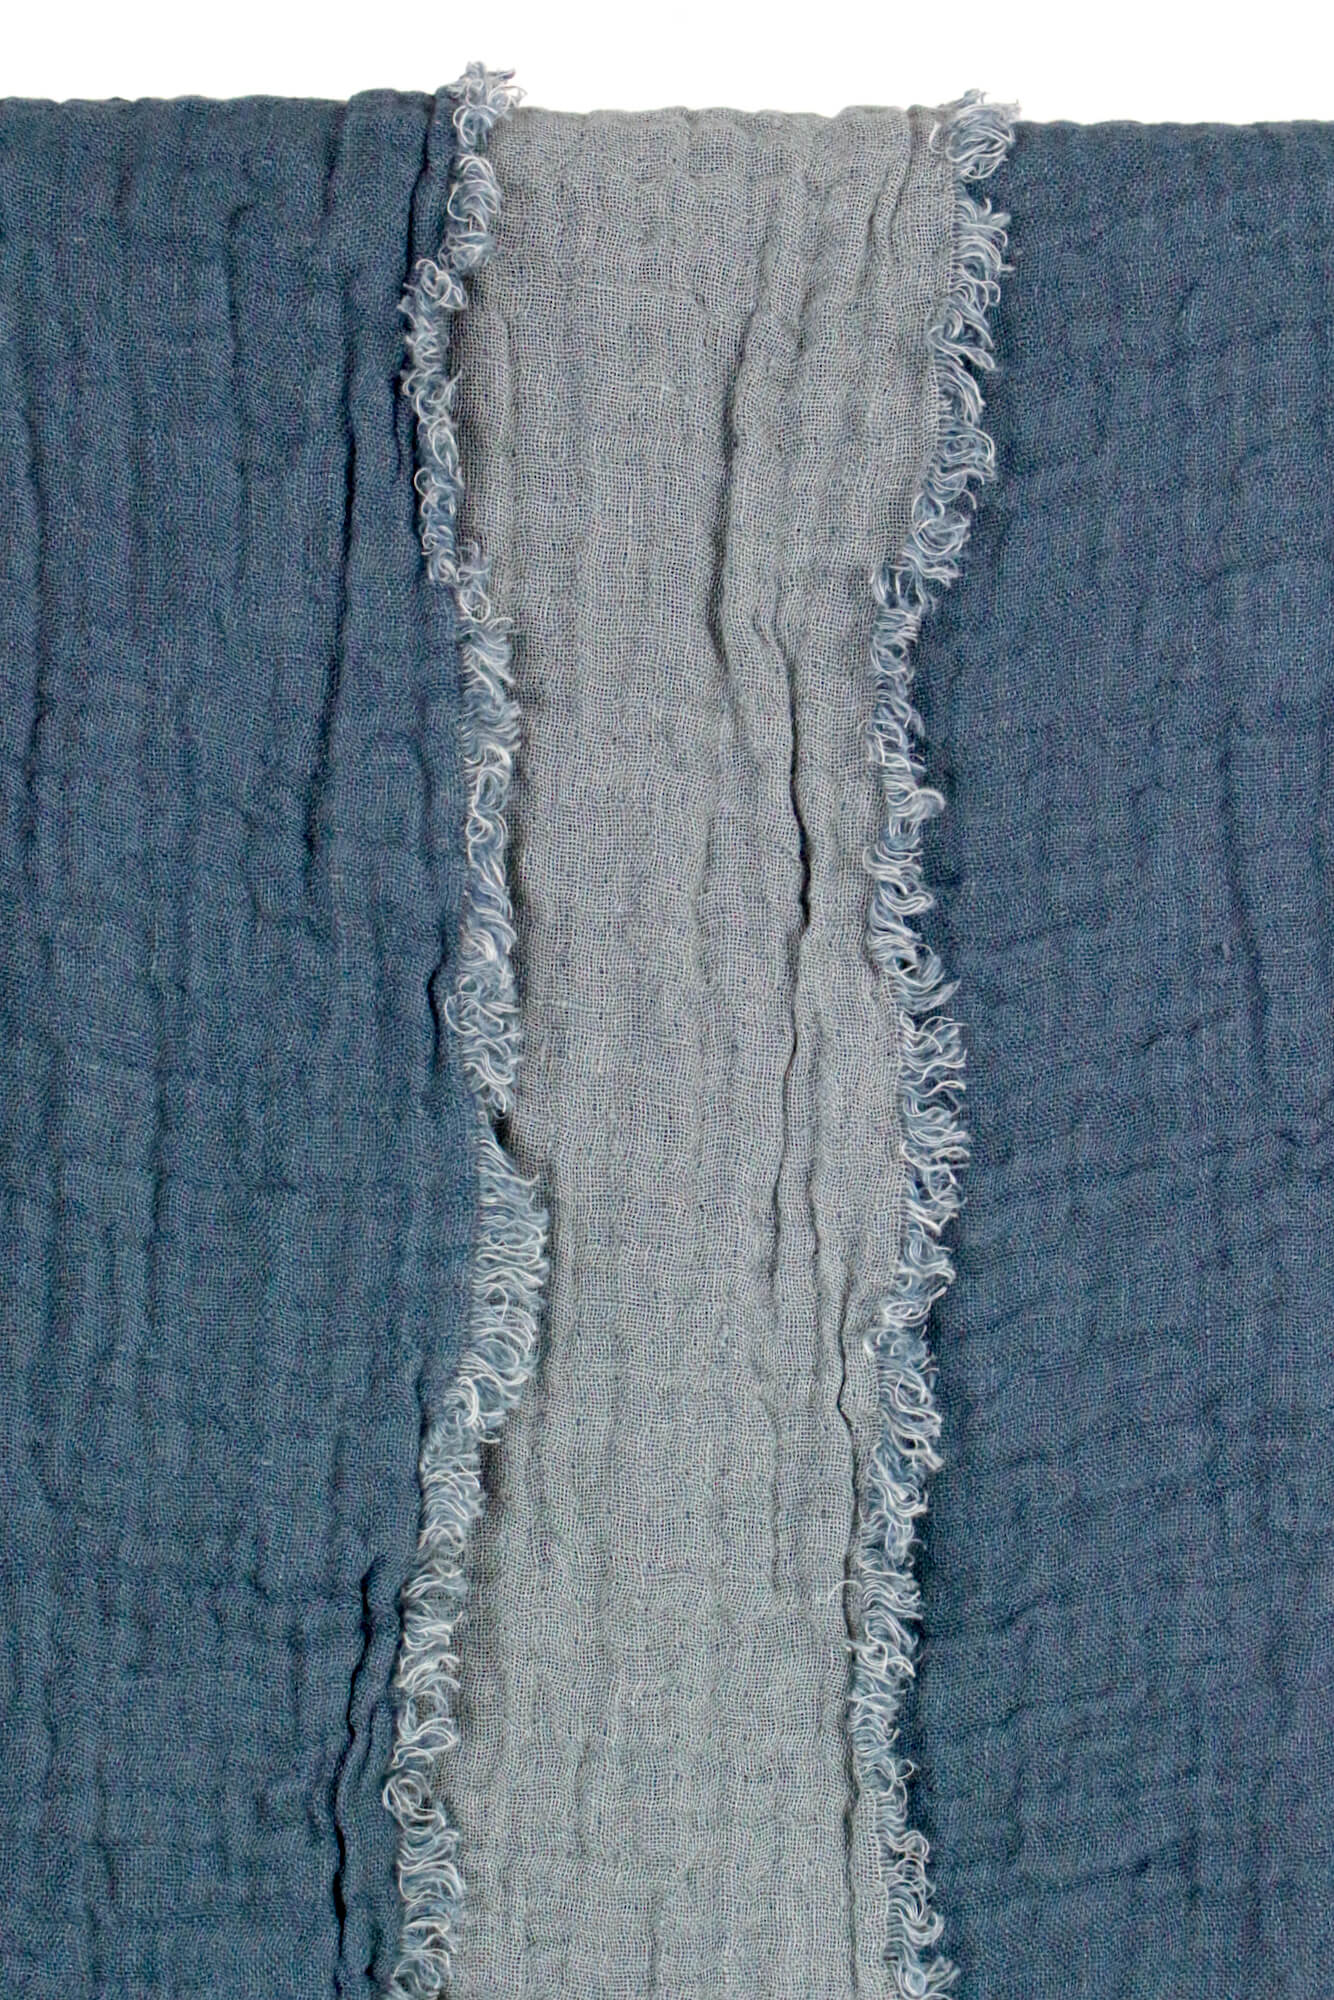 Decke aus leinenkrepp blau